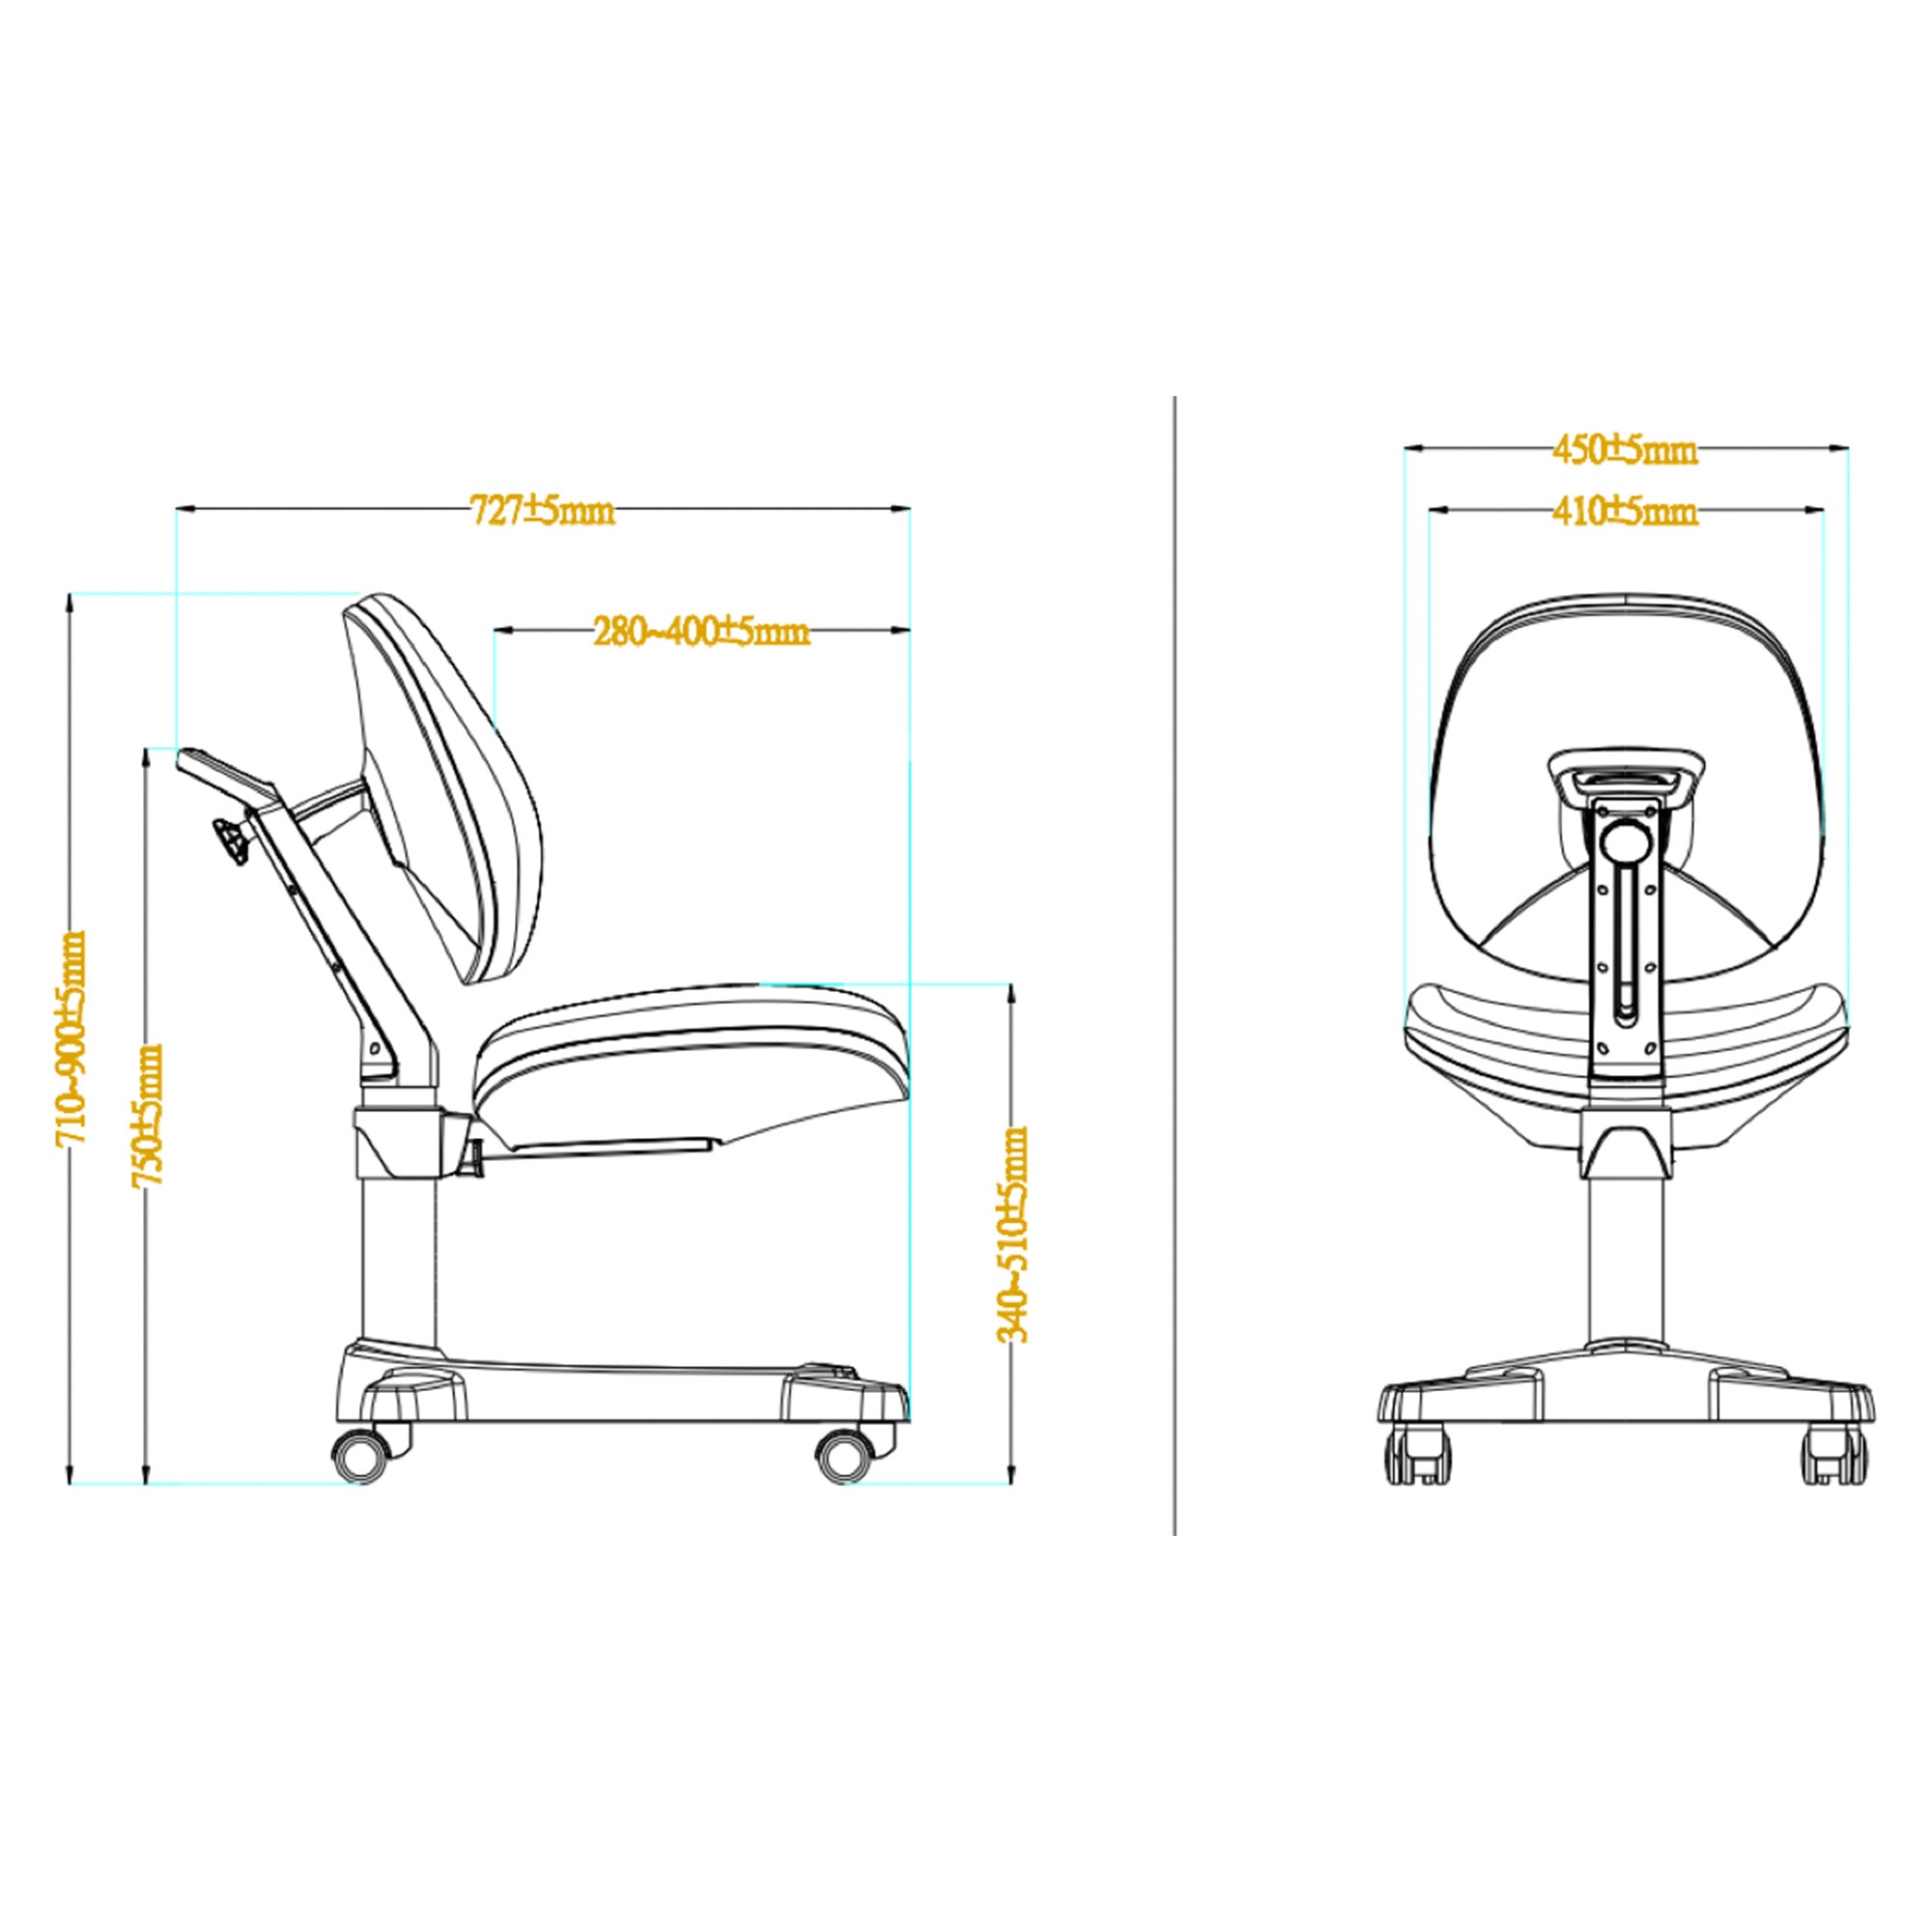 IMPACT - IM-C11-GY- Kids Ergonomic Chair (Grey)